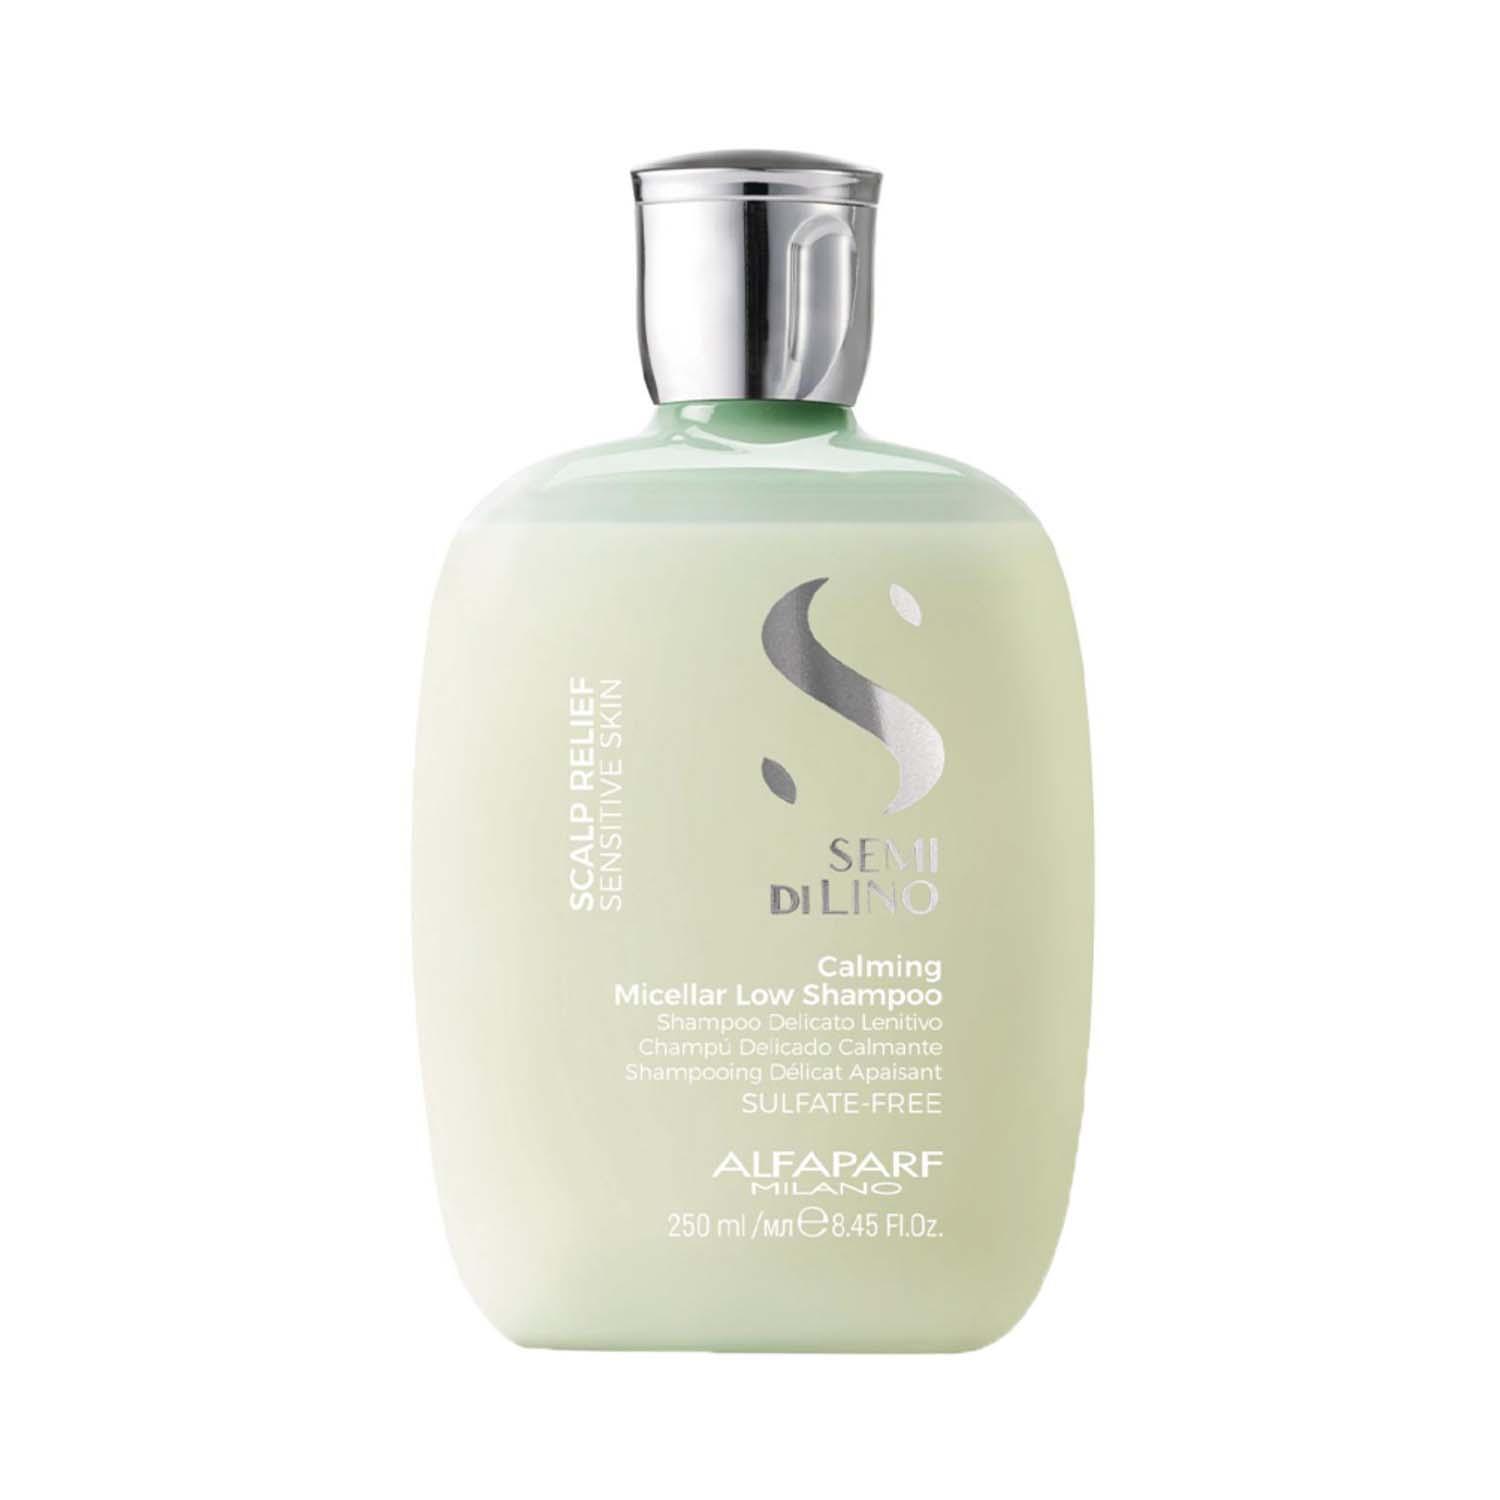 Alfaparf Milano | Alfaparf Milano Scalp Relief Calming Micellar Low Shampoo For Sensitive And Oily Scalp (250 ml)